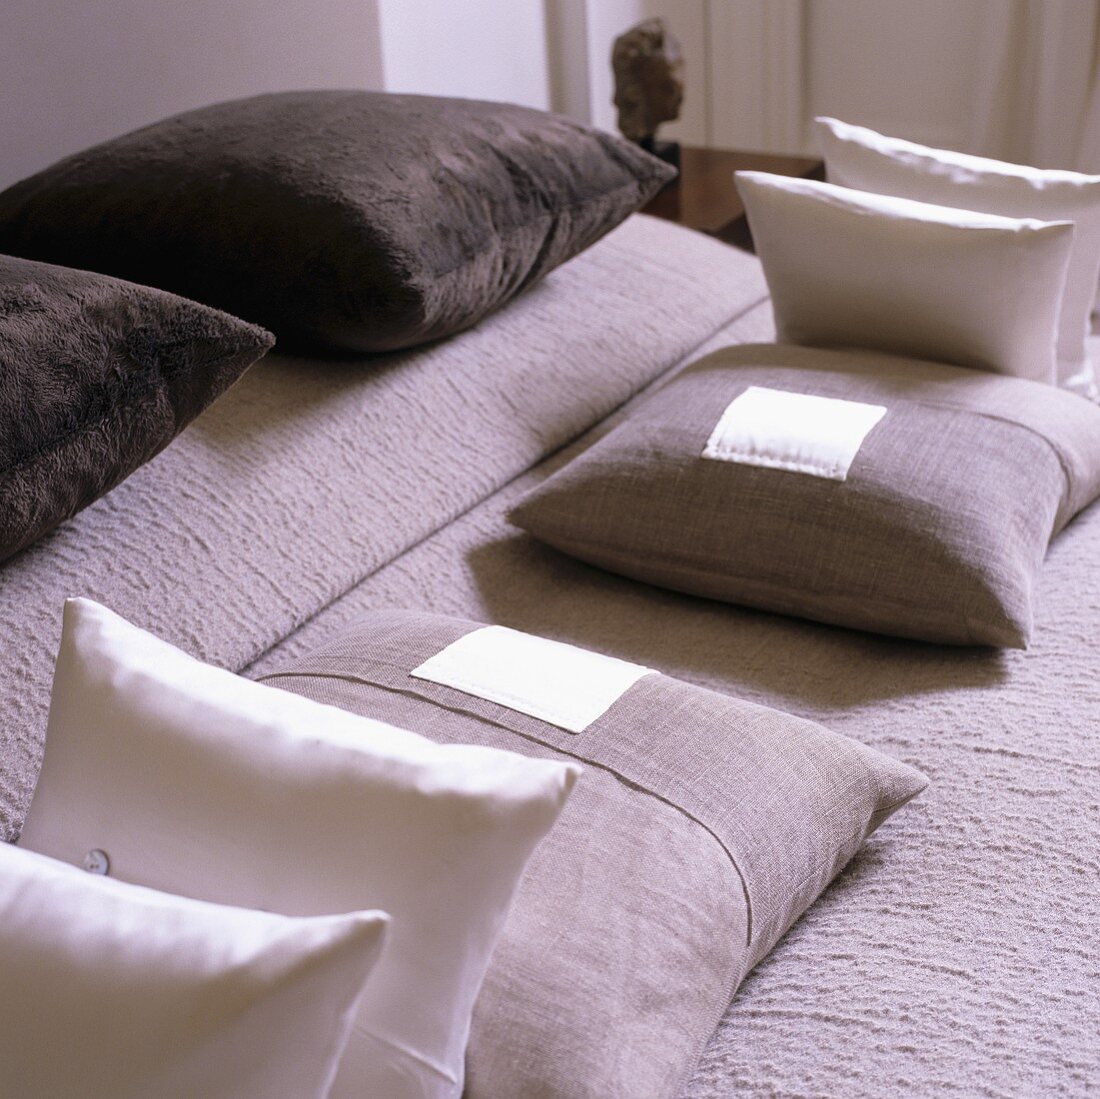 A symmetrical arrangement of cushions on a bed